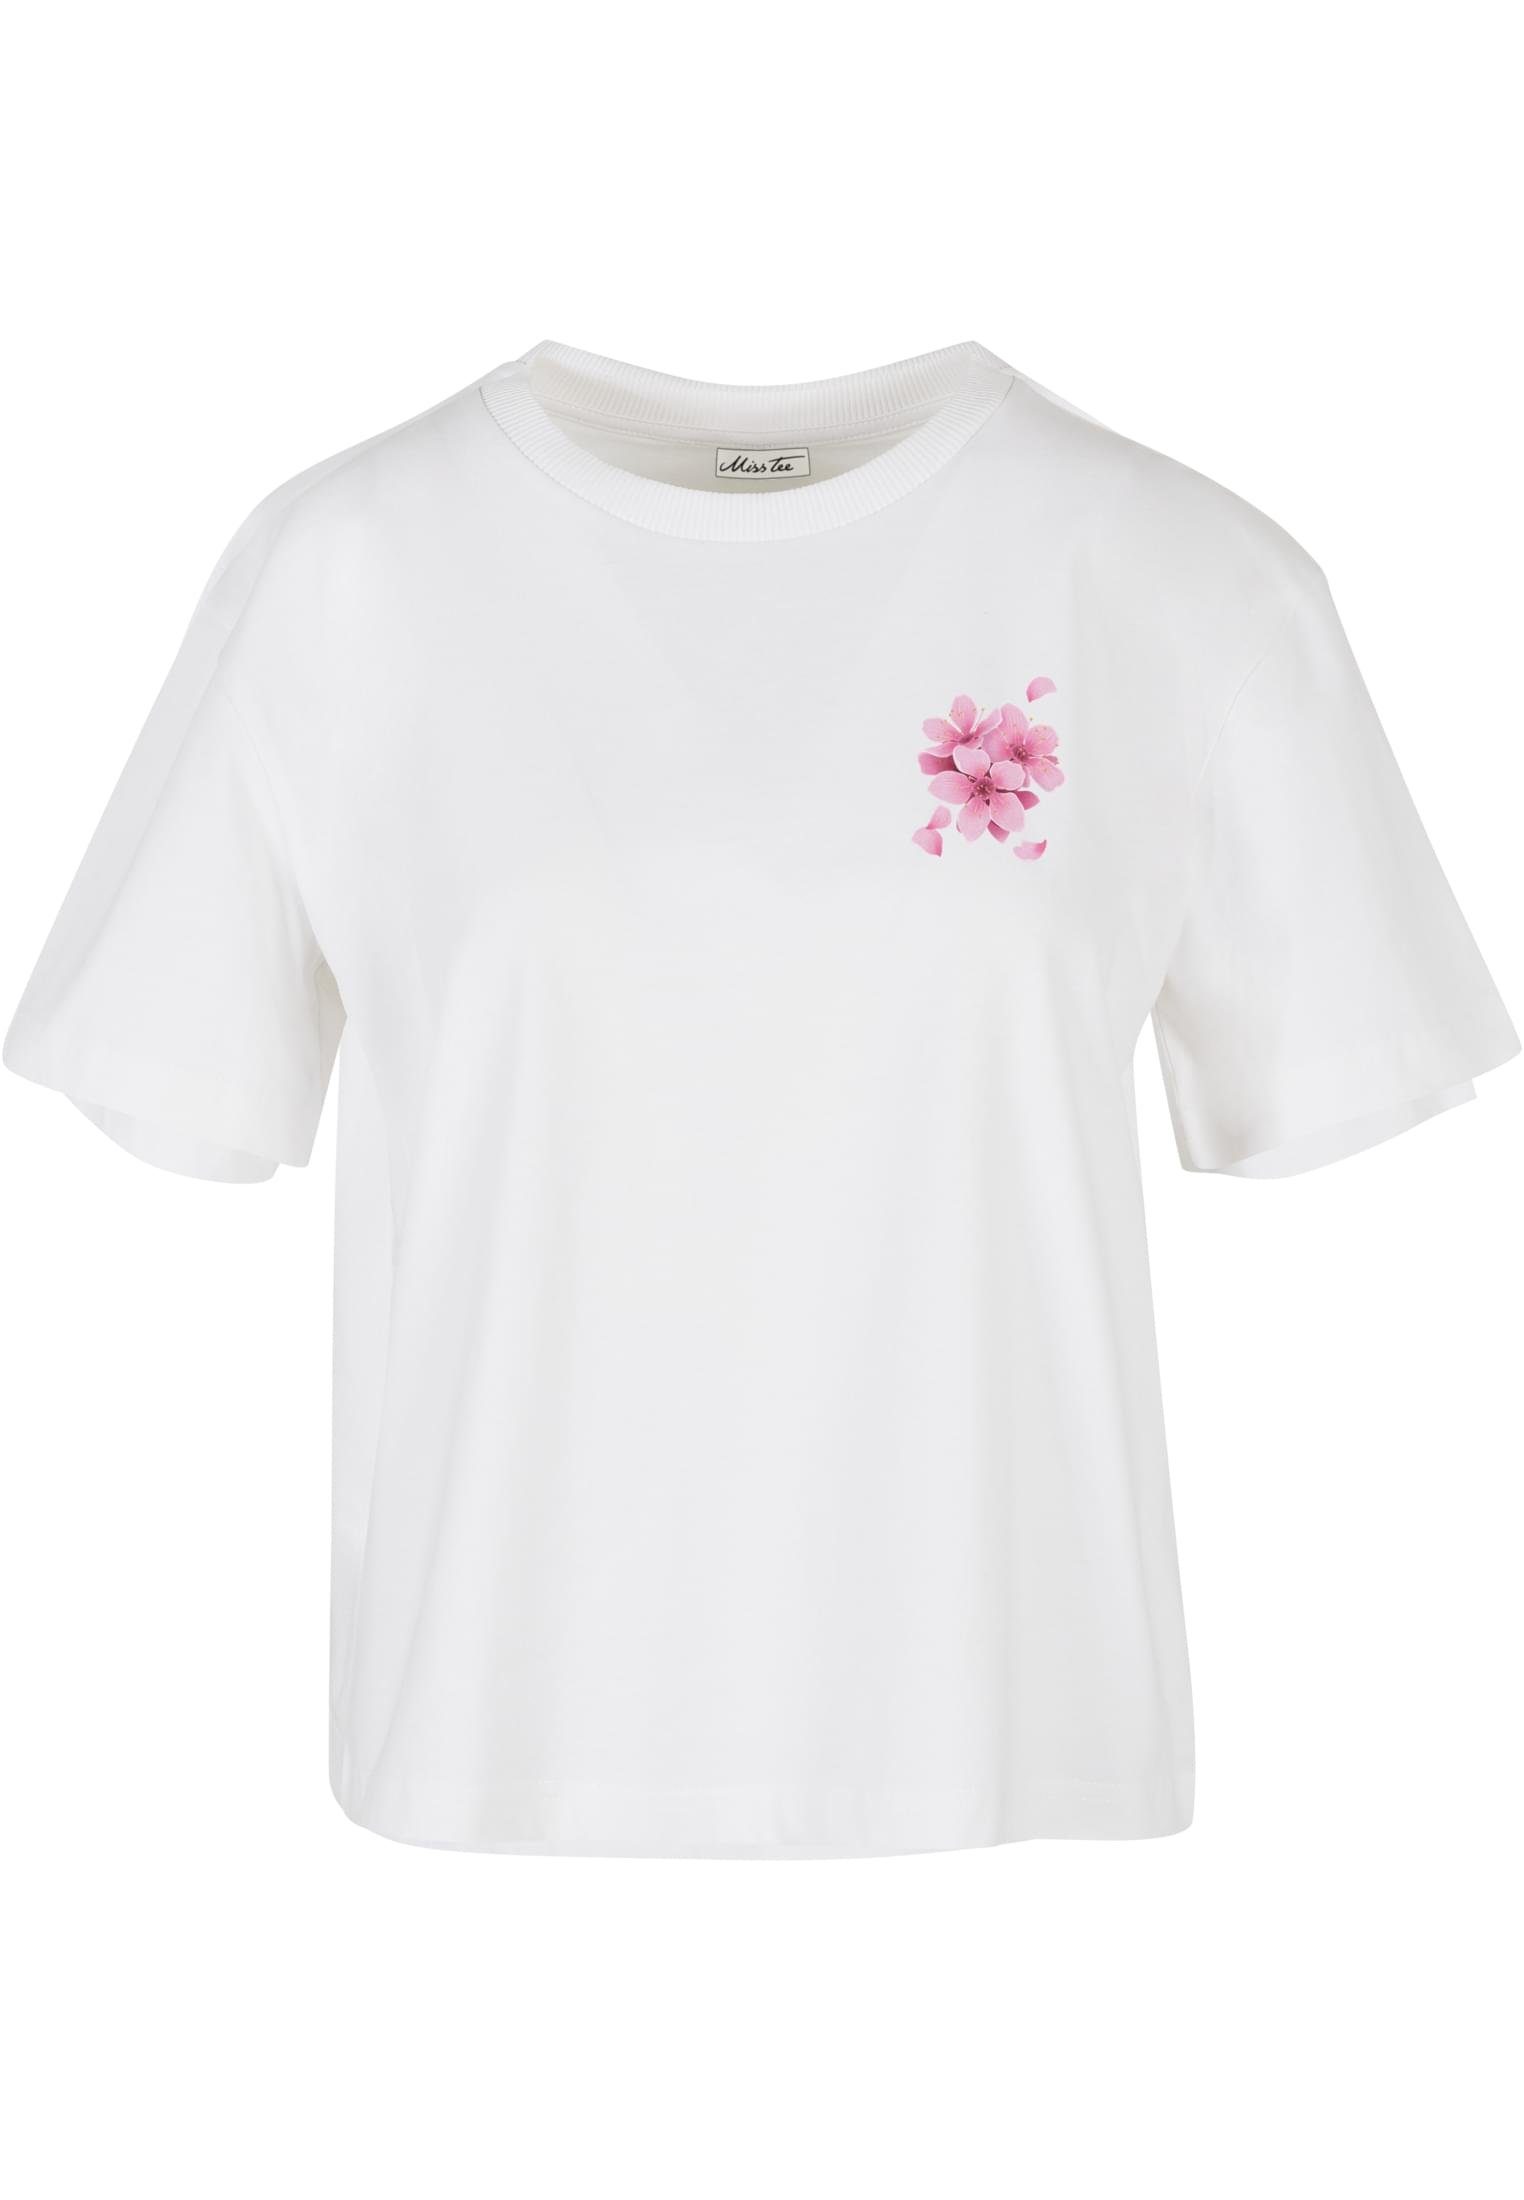 MisterTee Kurzarmshirt Damen Self Love Club Tee (1-tlg), Stylisches T-Shirt  aus angenehmer Baumwollmischung